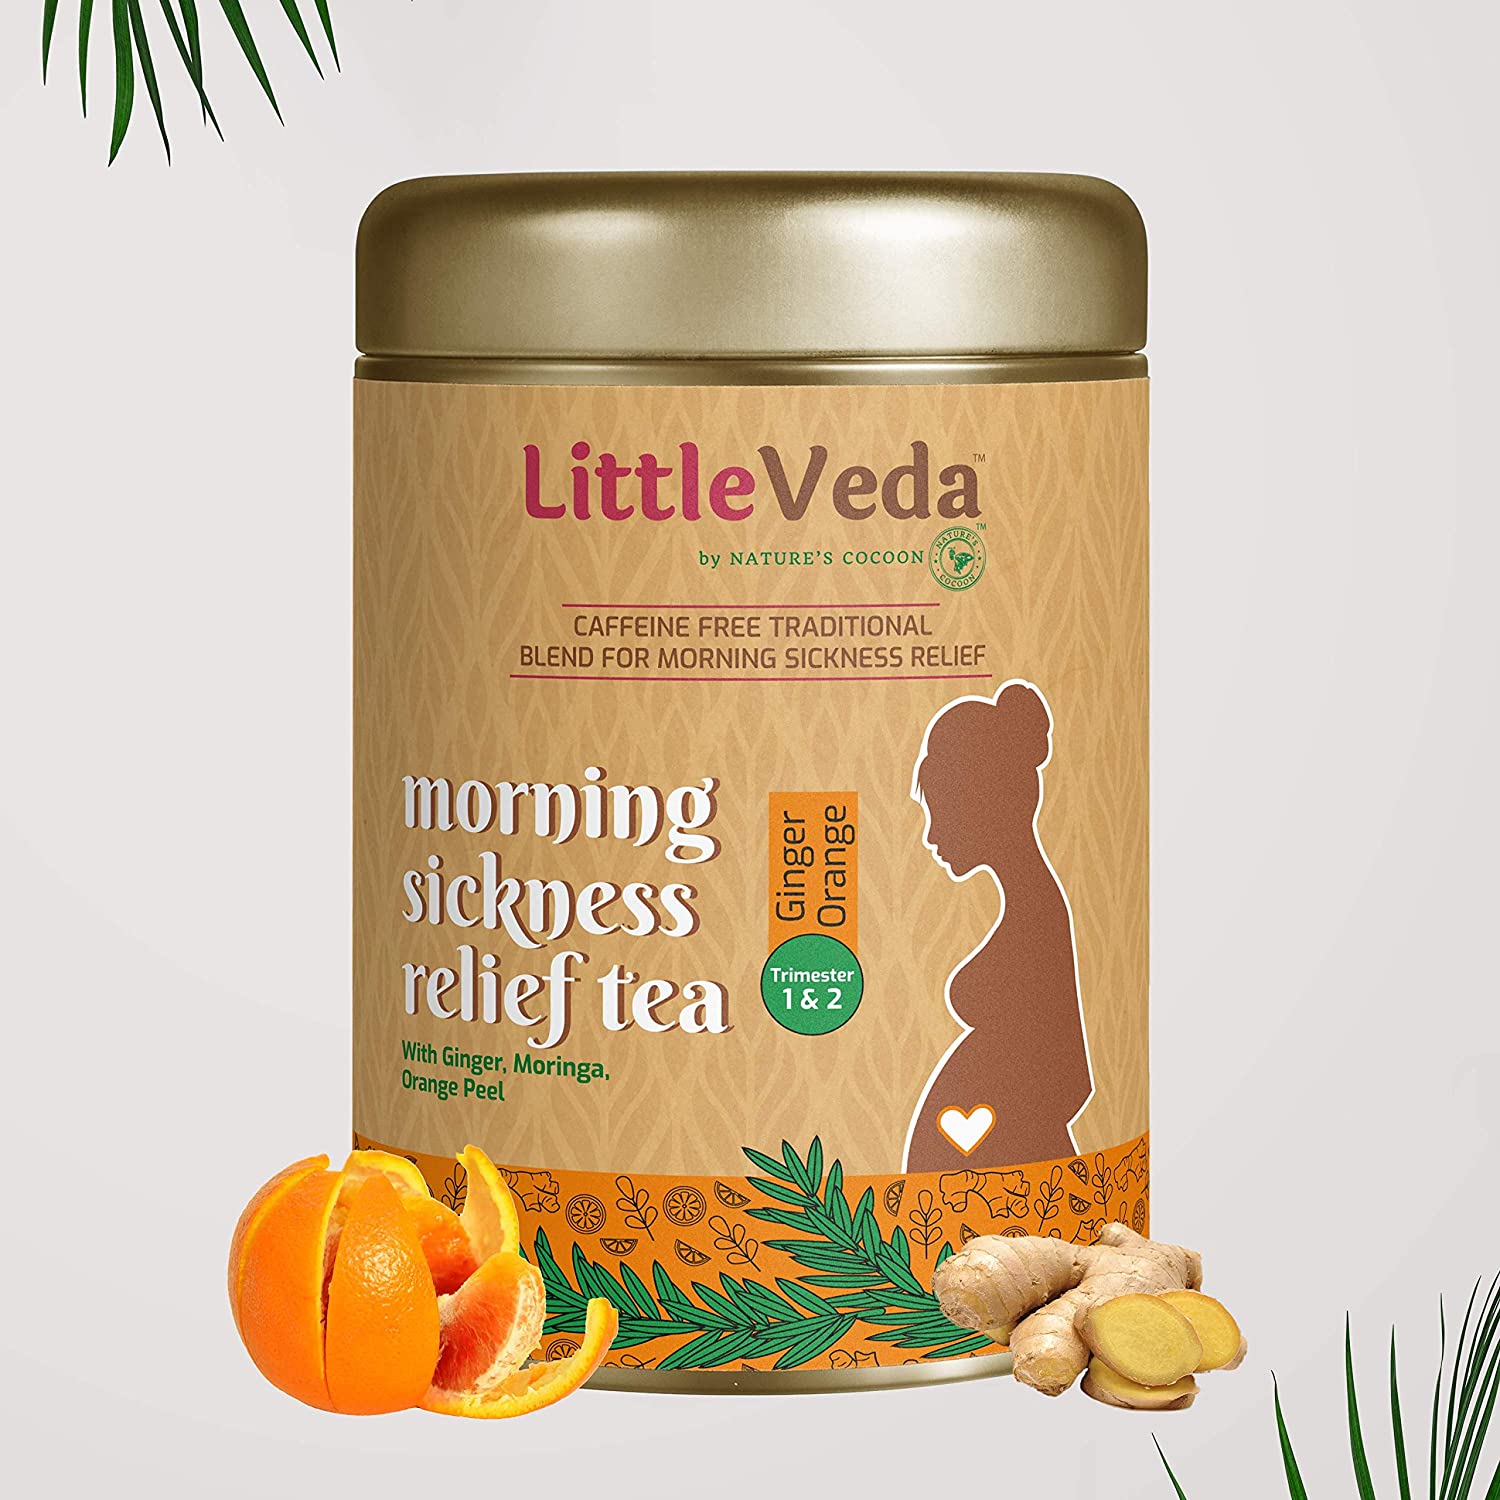 Little Veda Morning Sickness Relief Tea Image